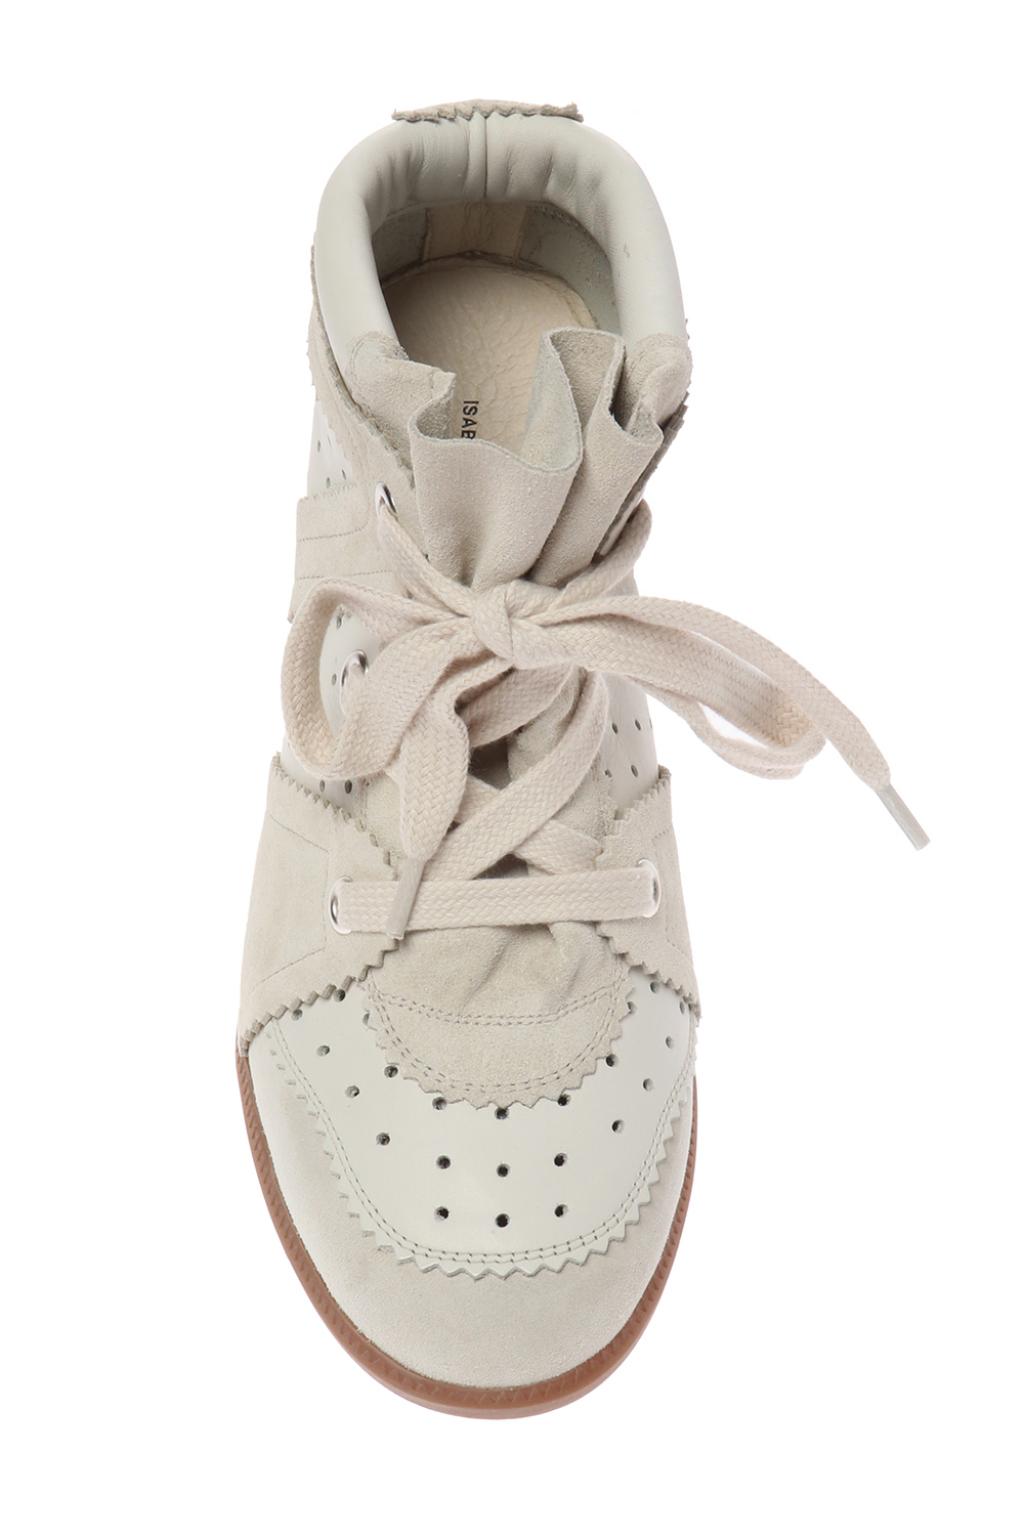 Endeløs analog nogle få Isabel Marant 'Betty' high-top sneakers | Women's Shoes | Vitkac